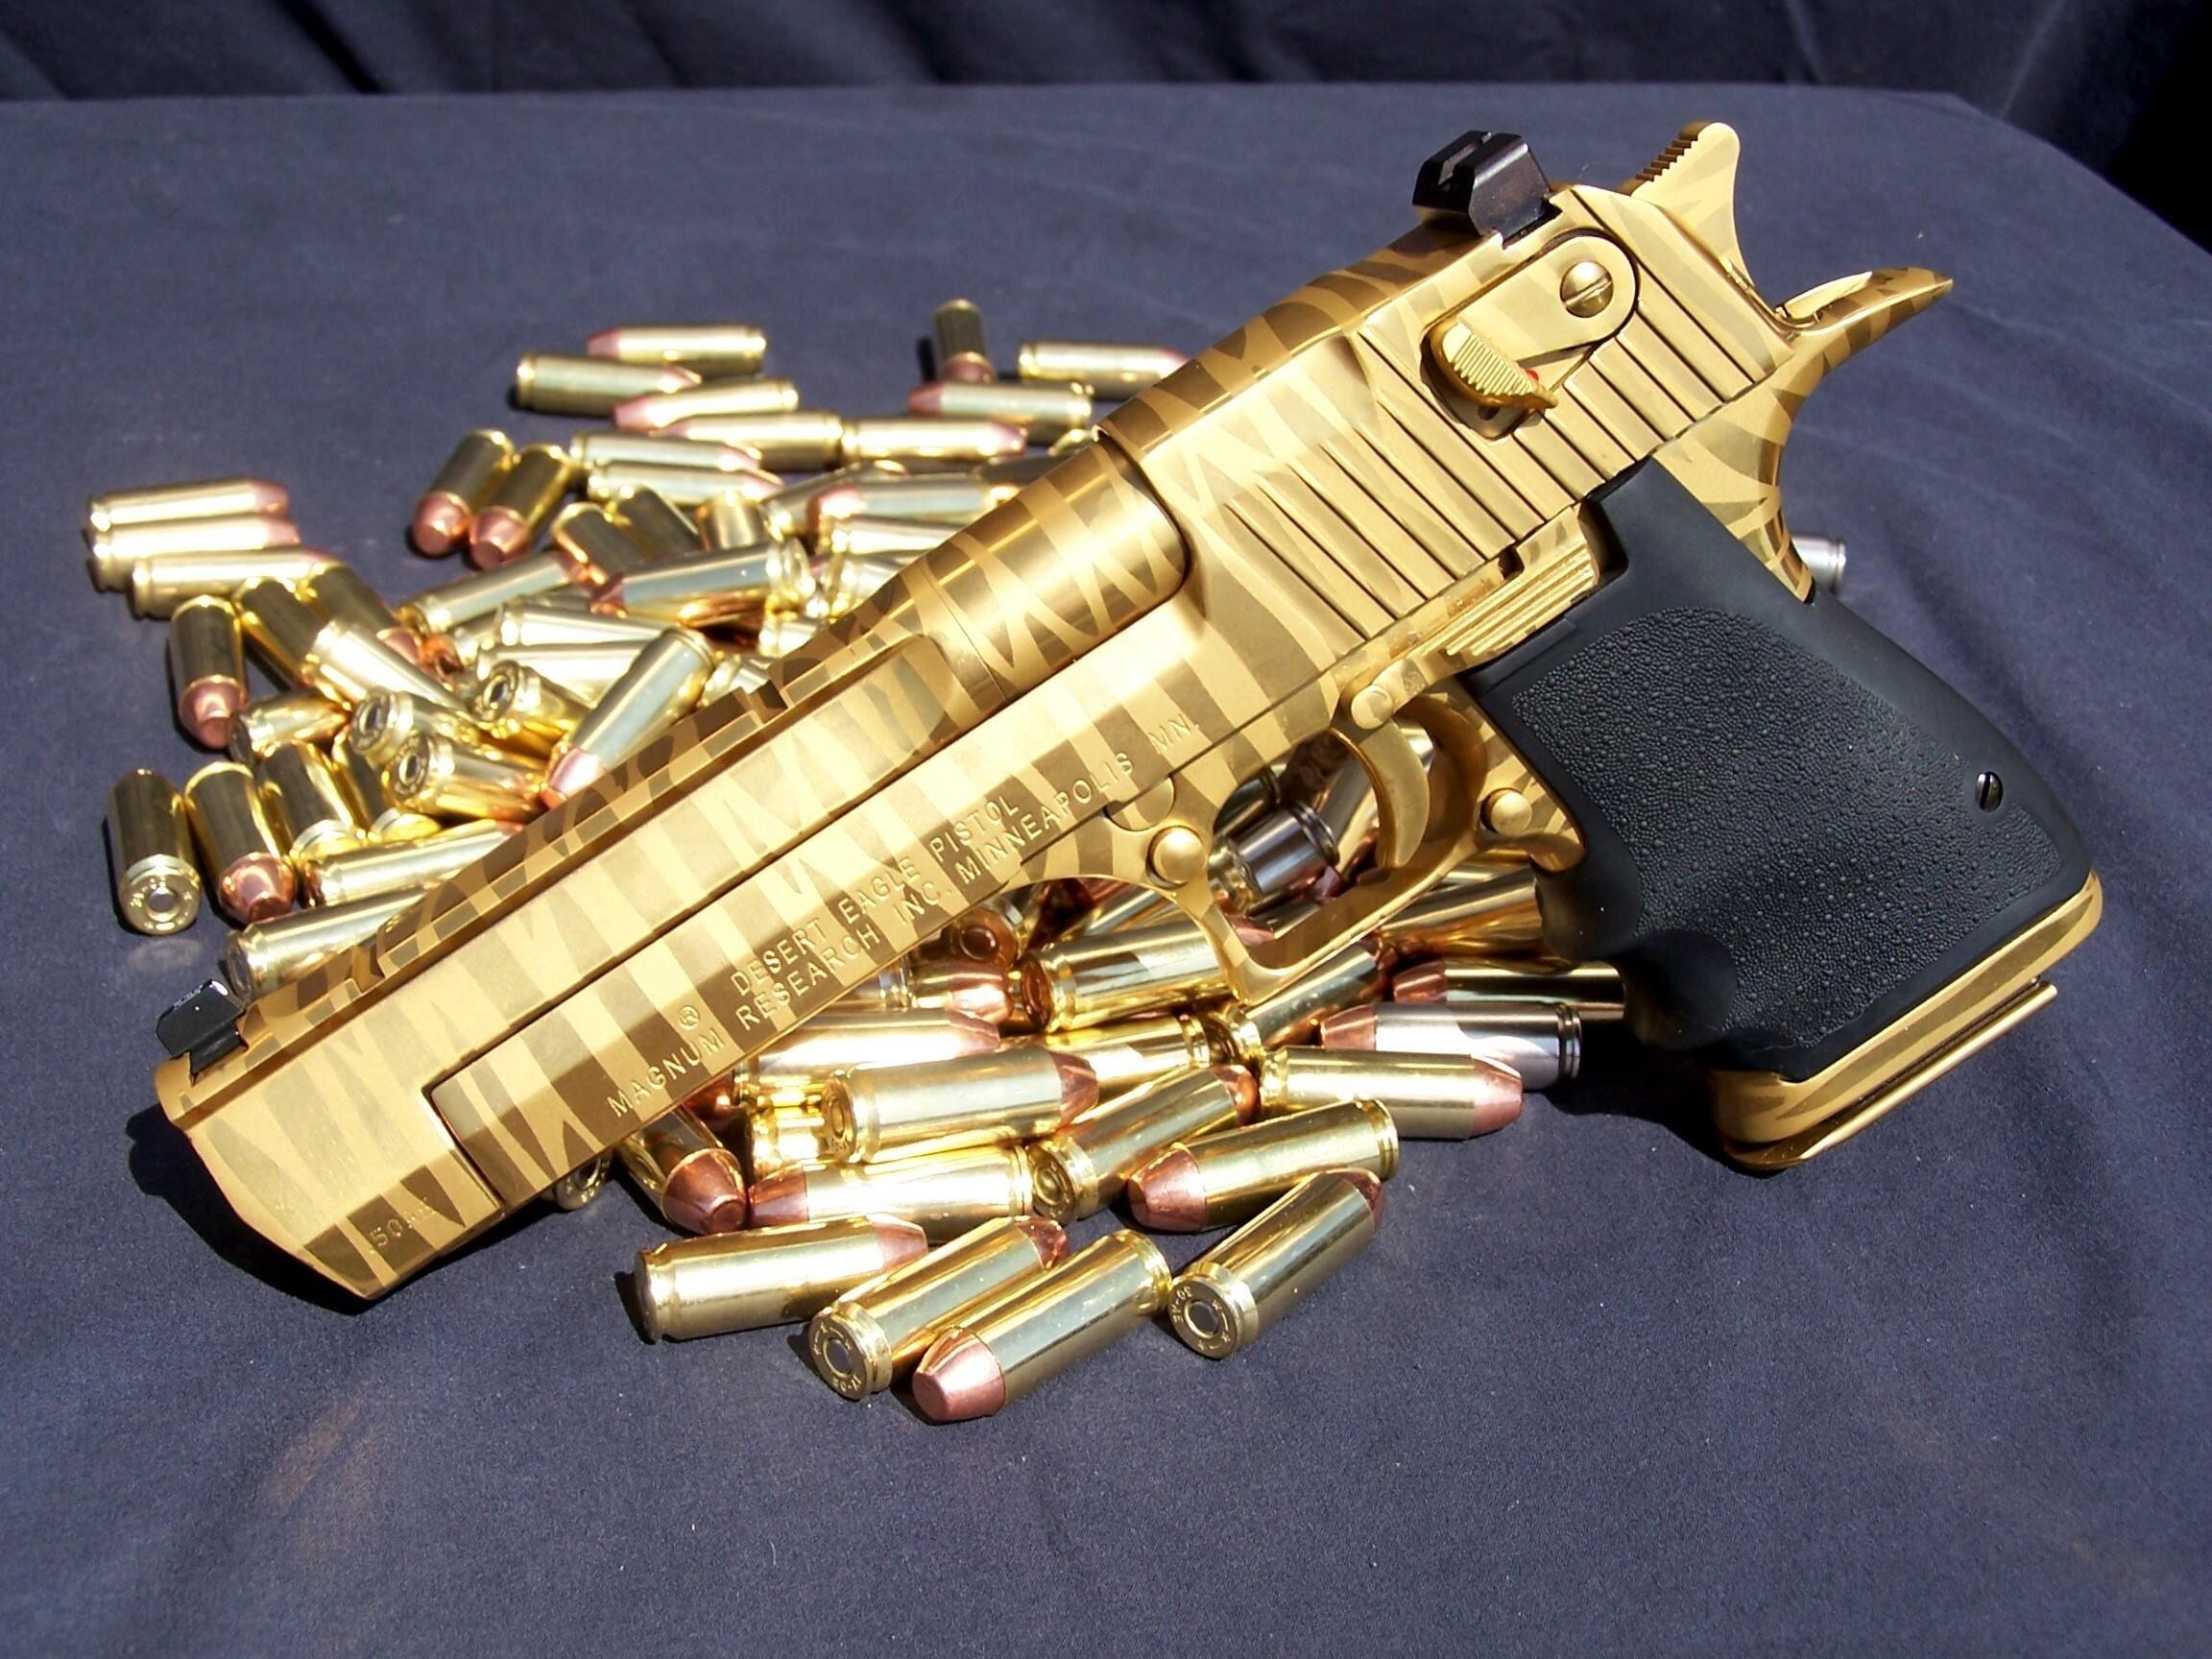 General 2304x1728 weapon Desert Eagle pistol army military gold American firearms Israeli firearms side view ammunition closeup gun